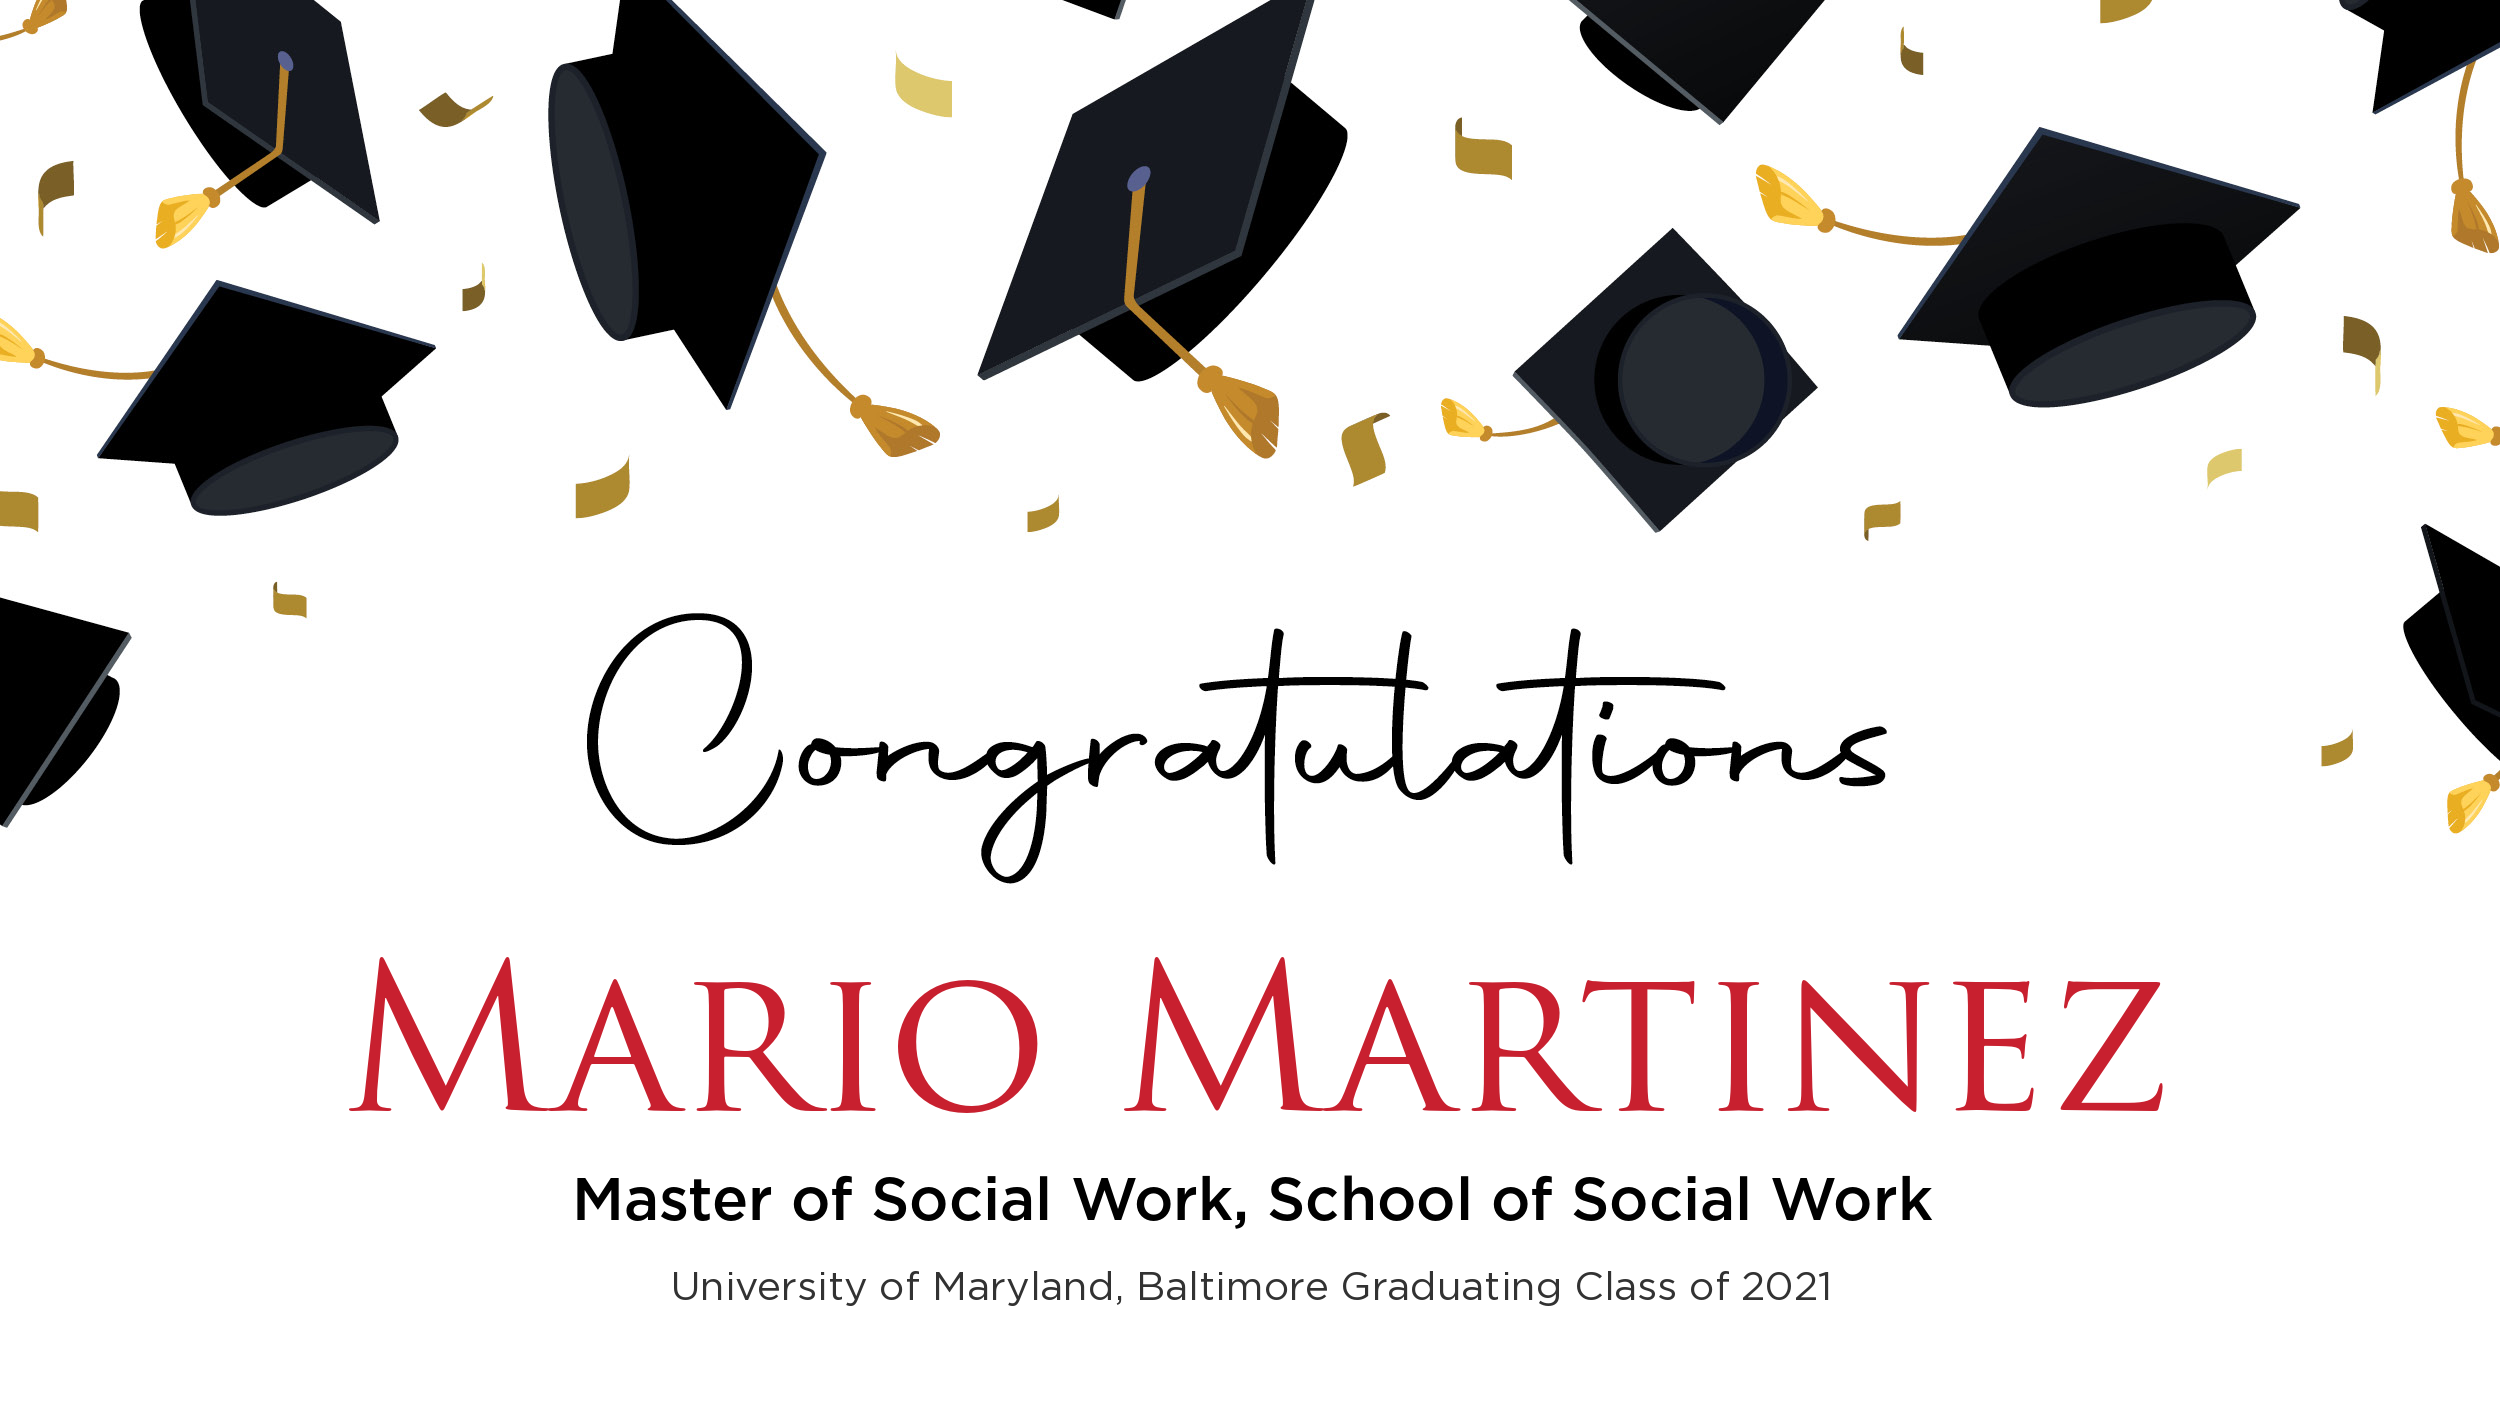 Congratulations Mario Martinez, Master of Social Work